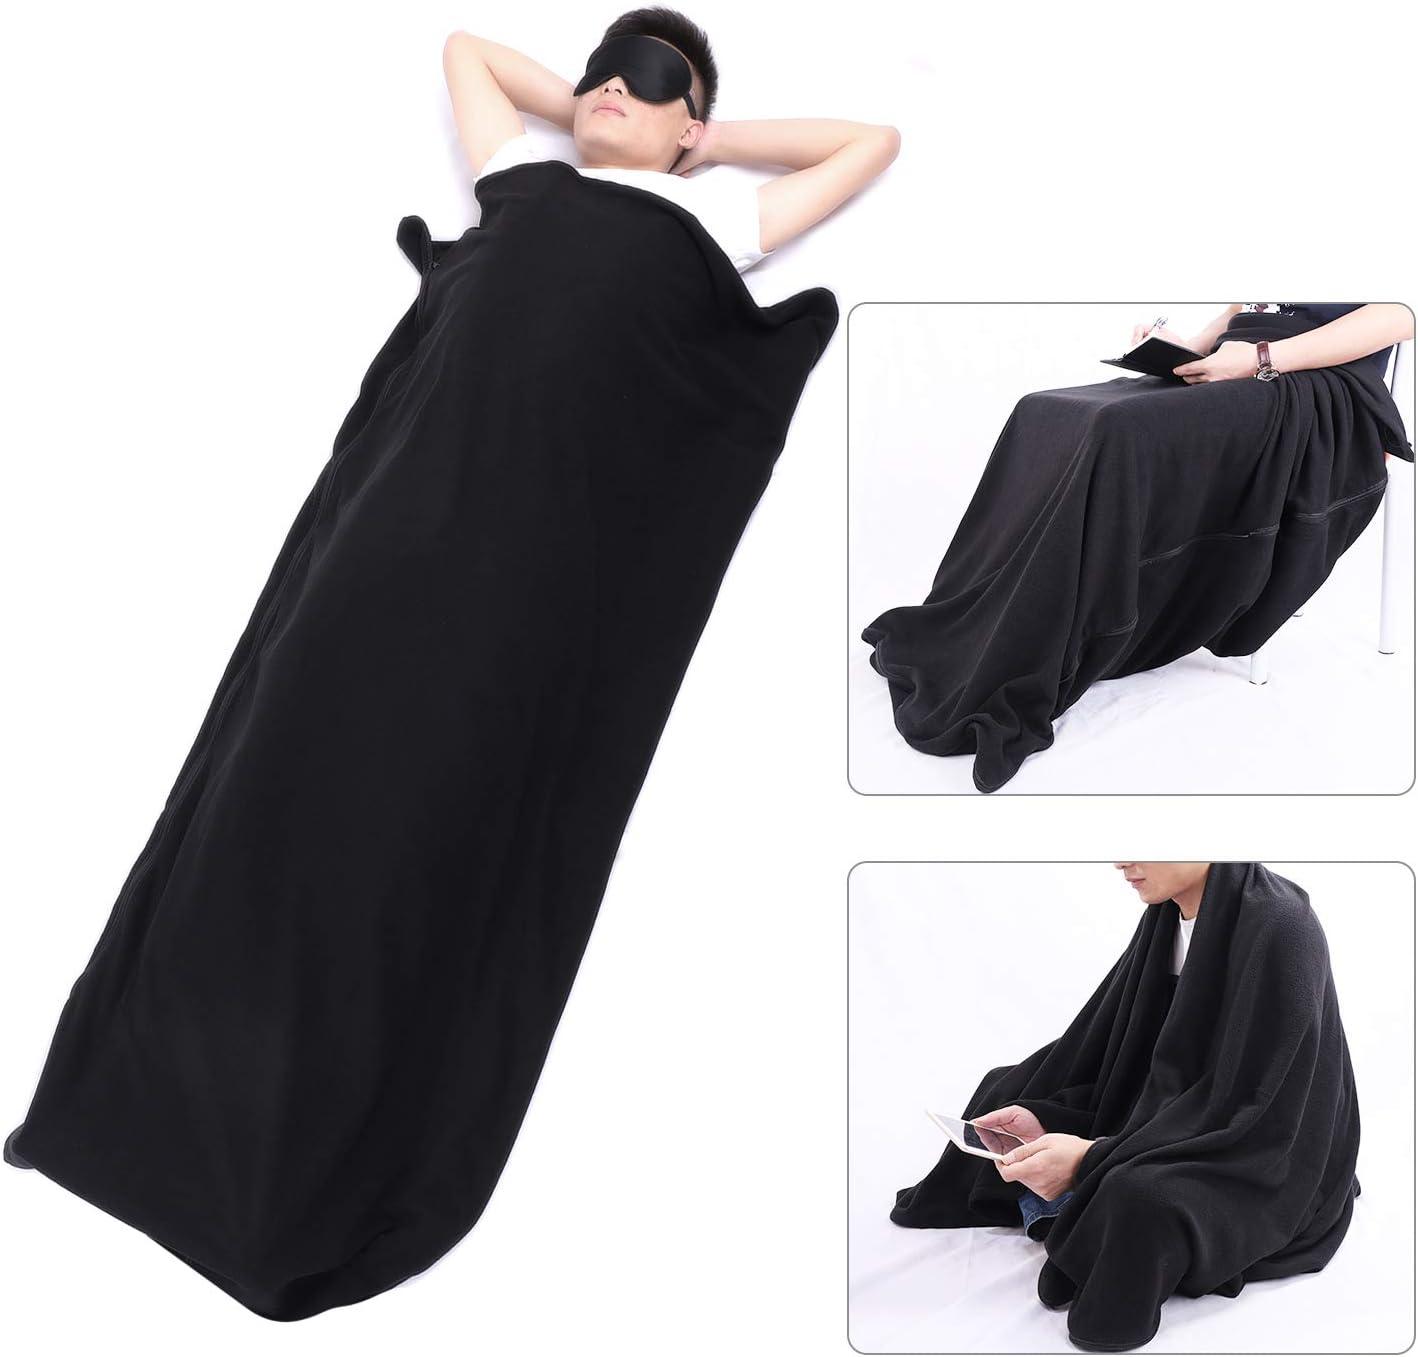 Sleeping Bag Liners: Silk, Fleece, Microfiber & Wool